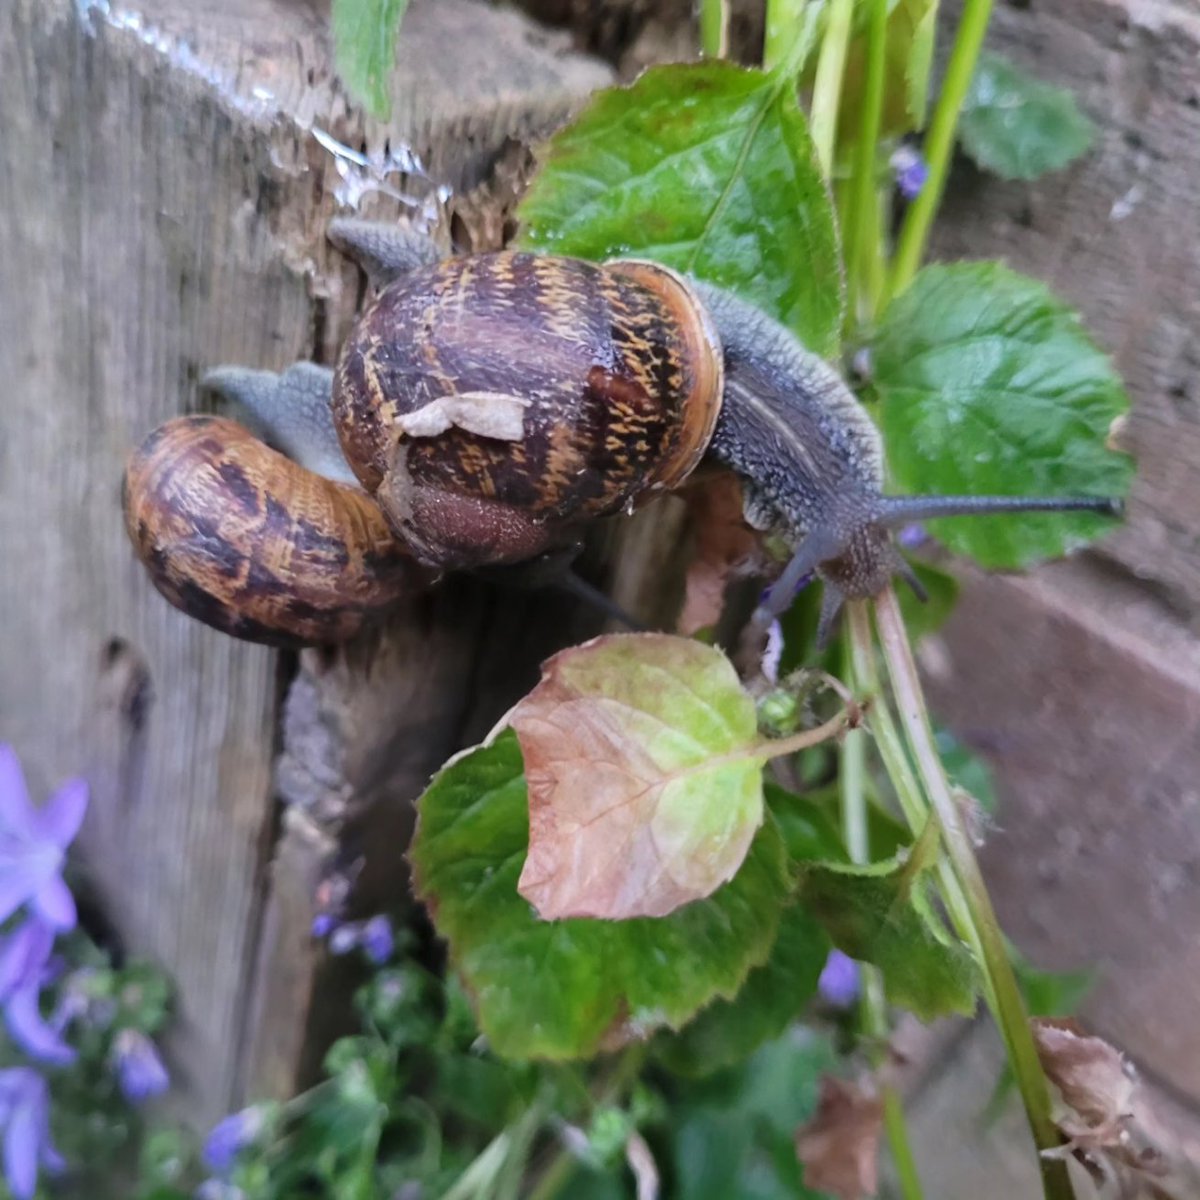 Snails - #snails #gardenwildlife #Springwatch #30DaysWild  #britishhwildlife  #twitternaturecommunity  #wildlifephotography #naturephotography  #ukwildlifeimages #westmidlands